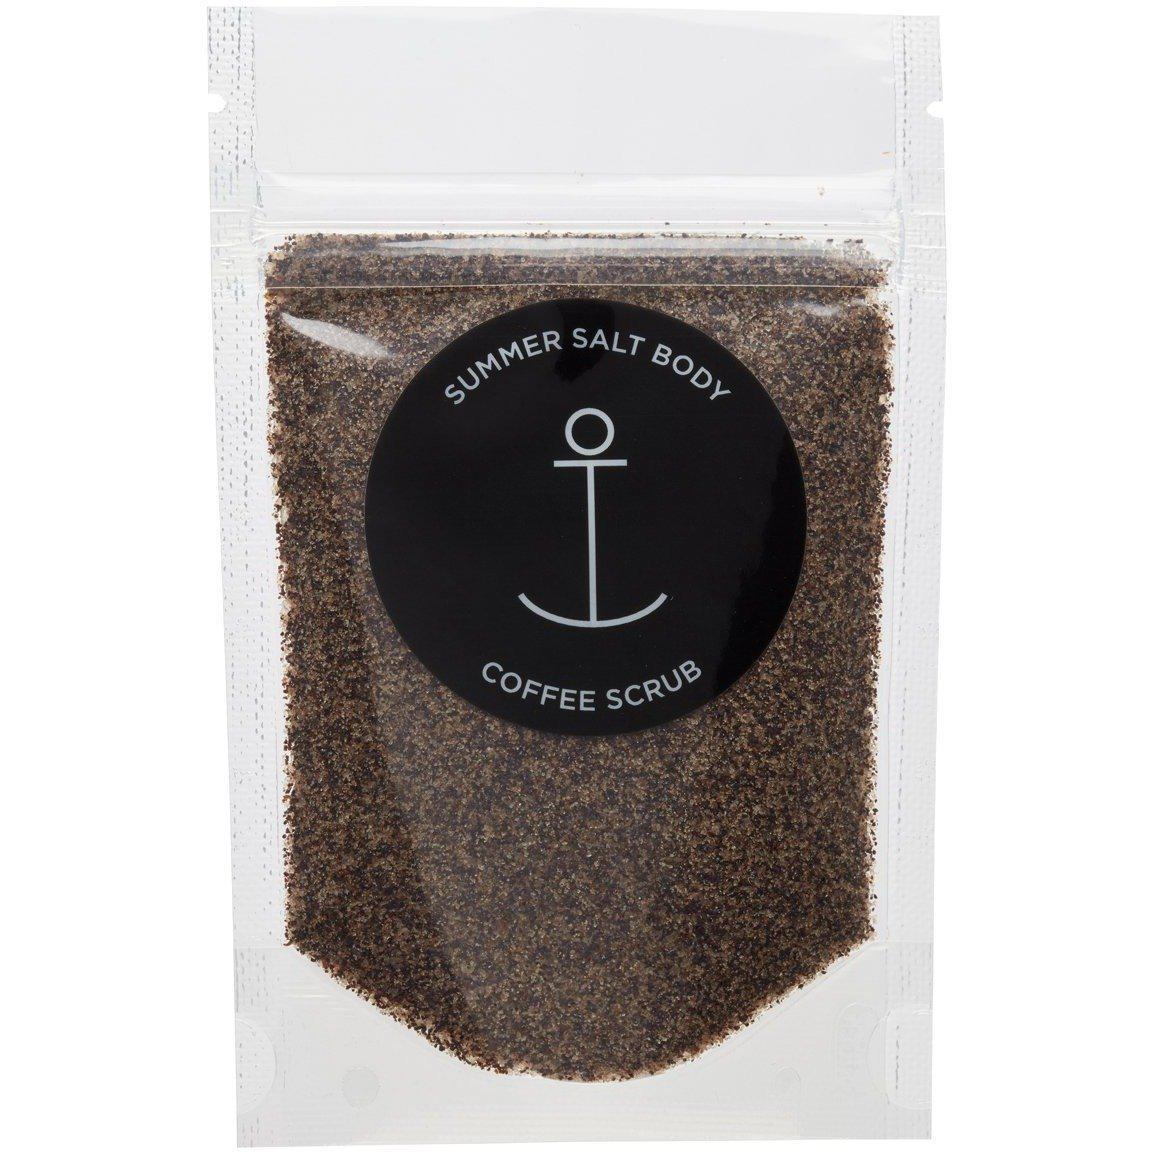 Mini Salt Scrub - 40g-Beauty & Well-Being-Summer Salt Body-Coffee-The Bay Room